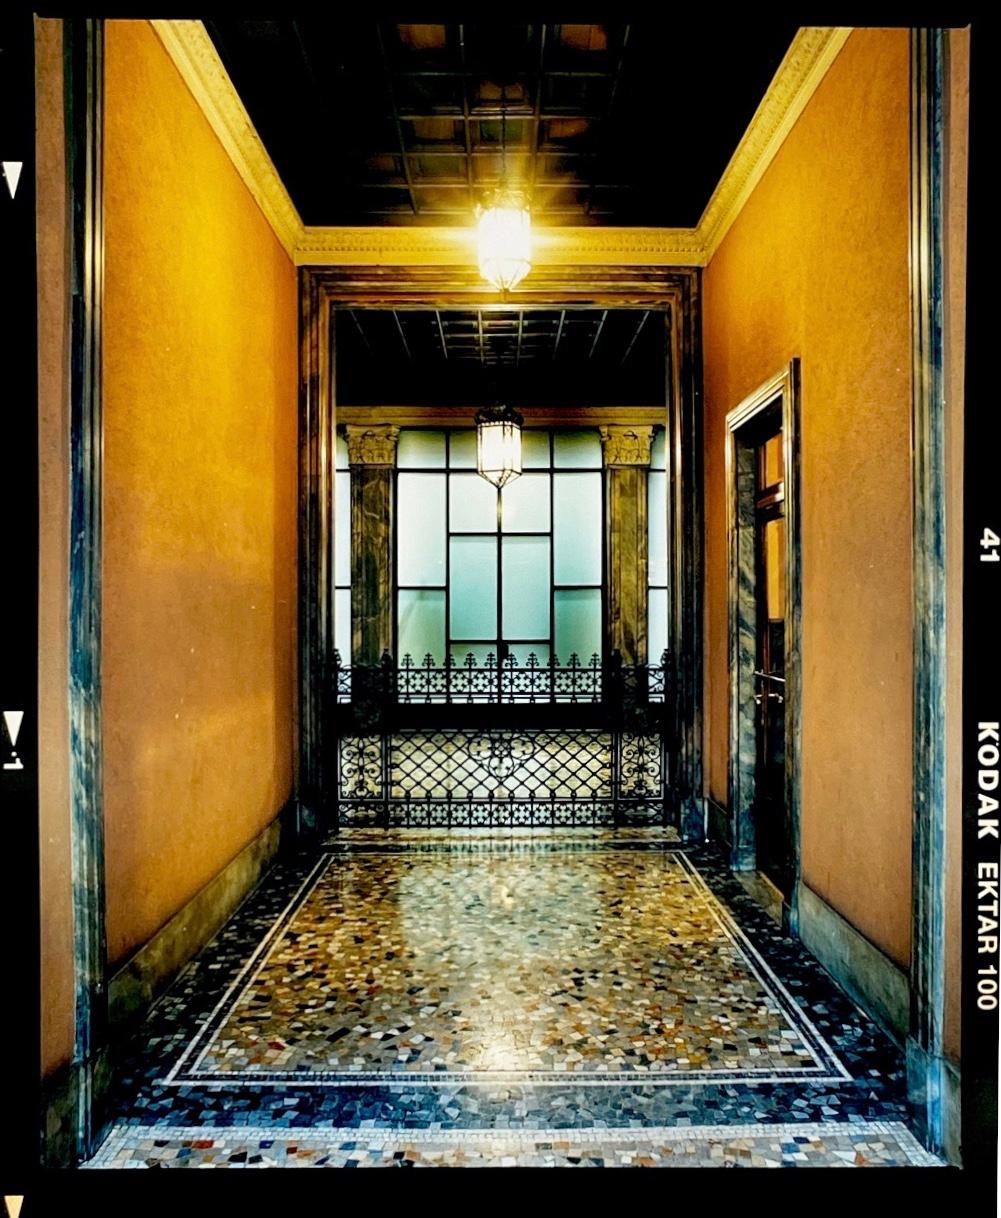 Richard Heeps Print - Foyer III, Milan - Italian architectural color photography